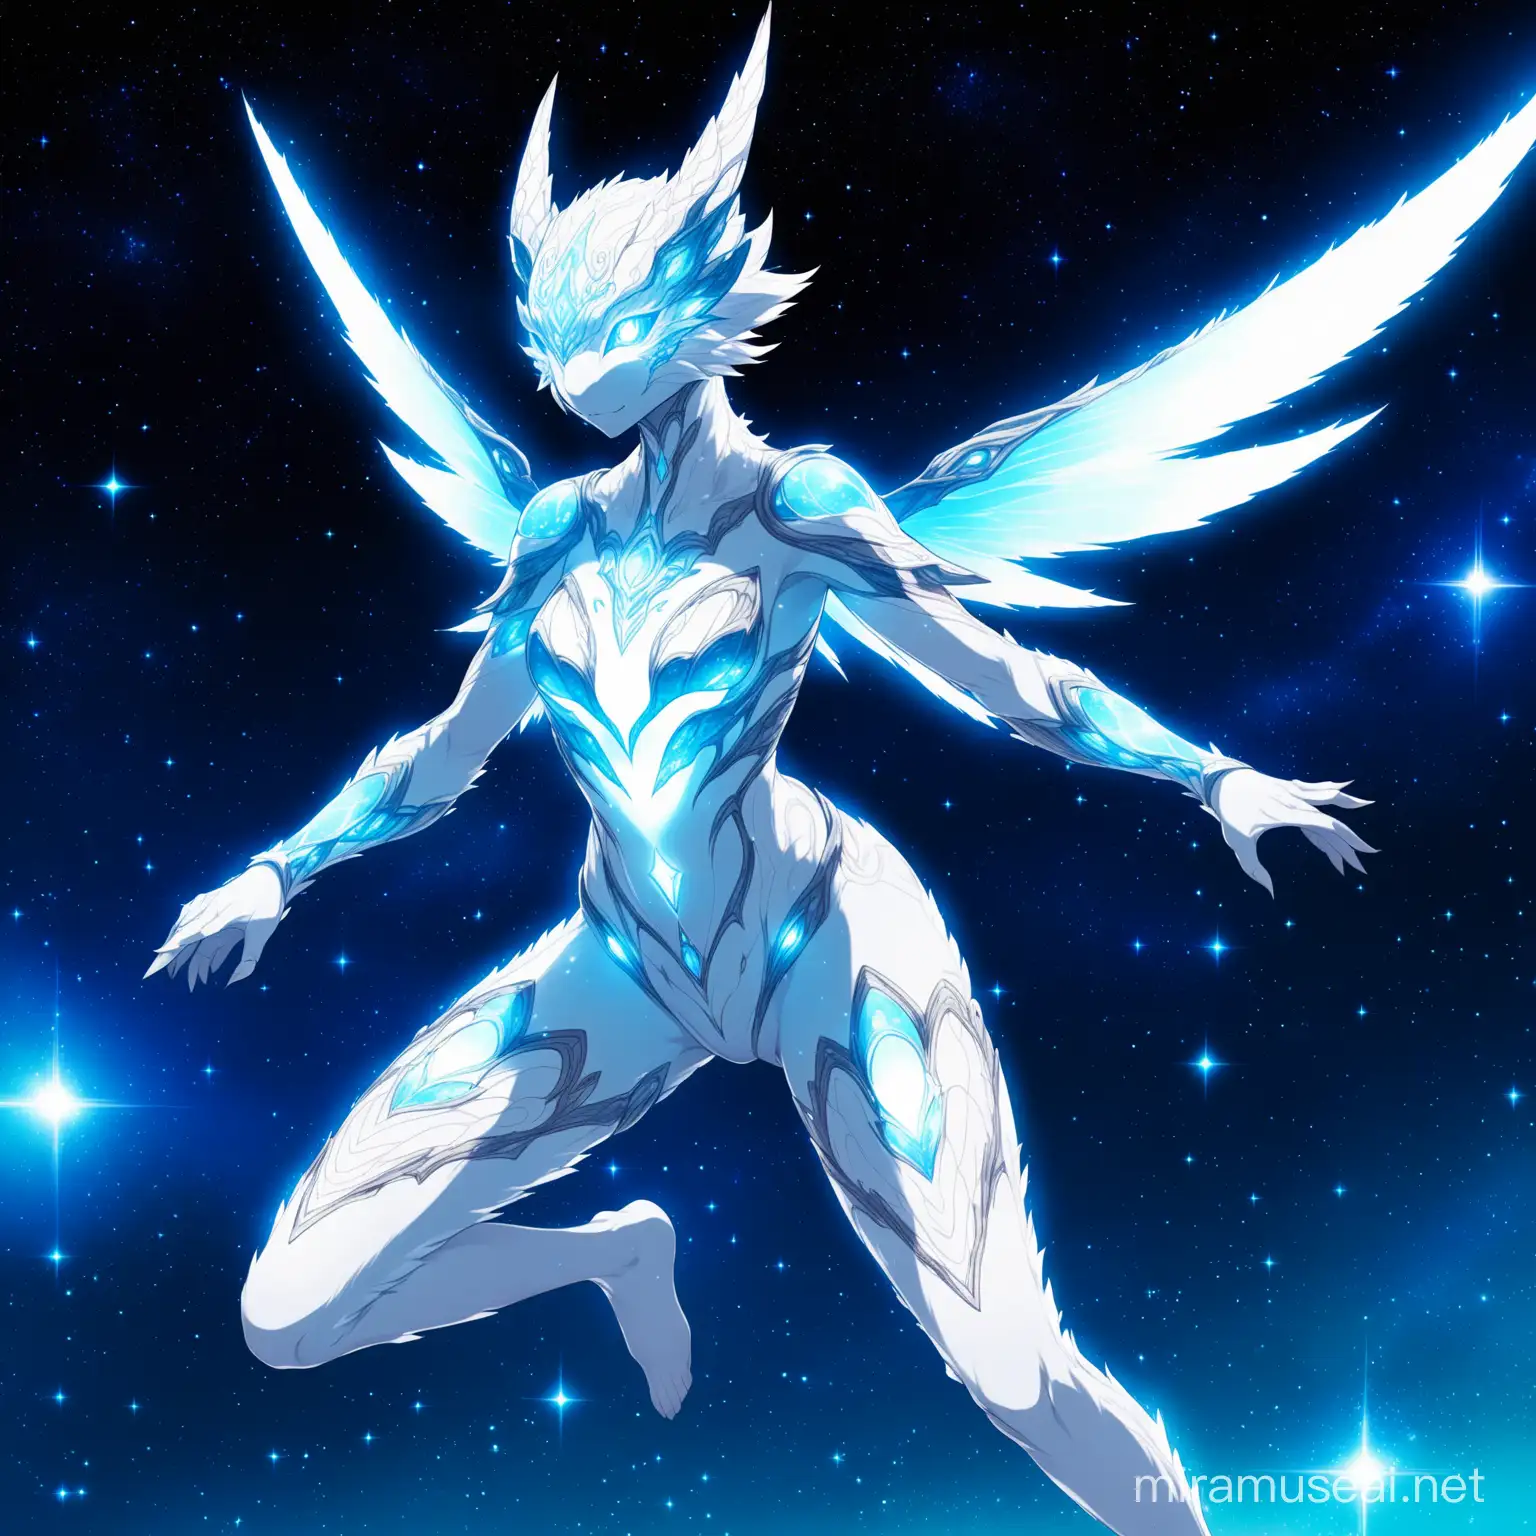 Luminous Galactic Fantasy Creature with AnimeInspired Aesthetic